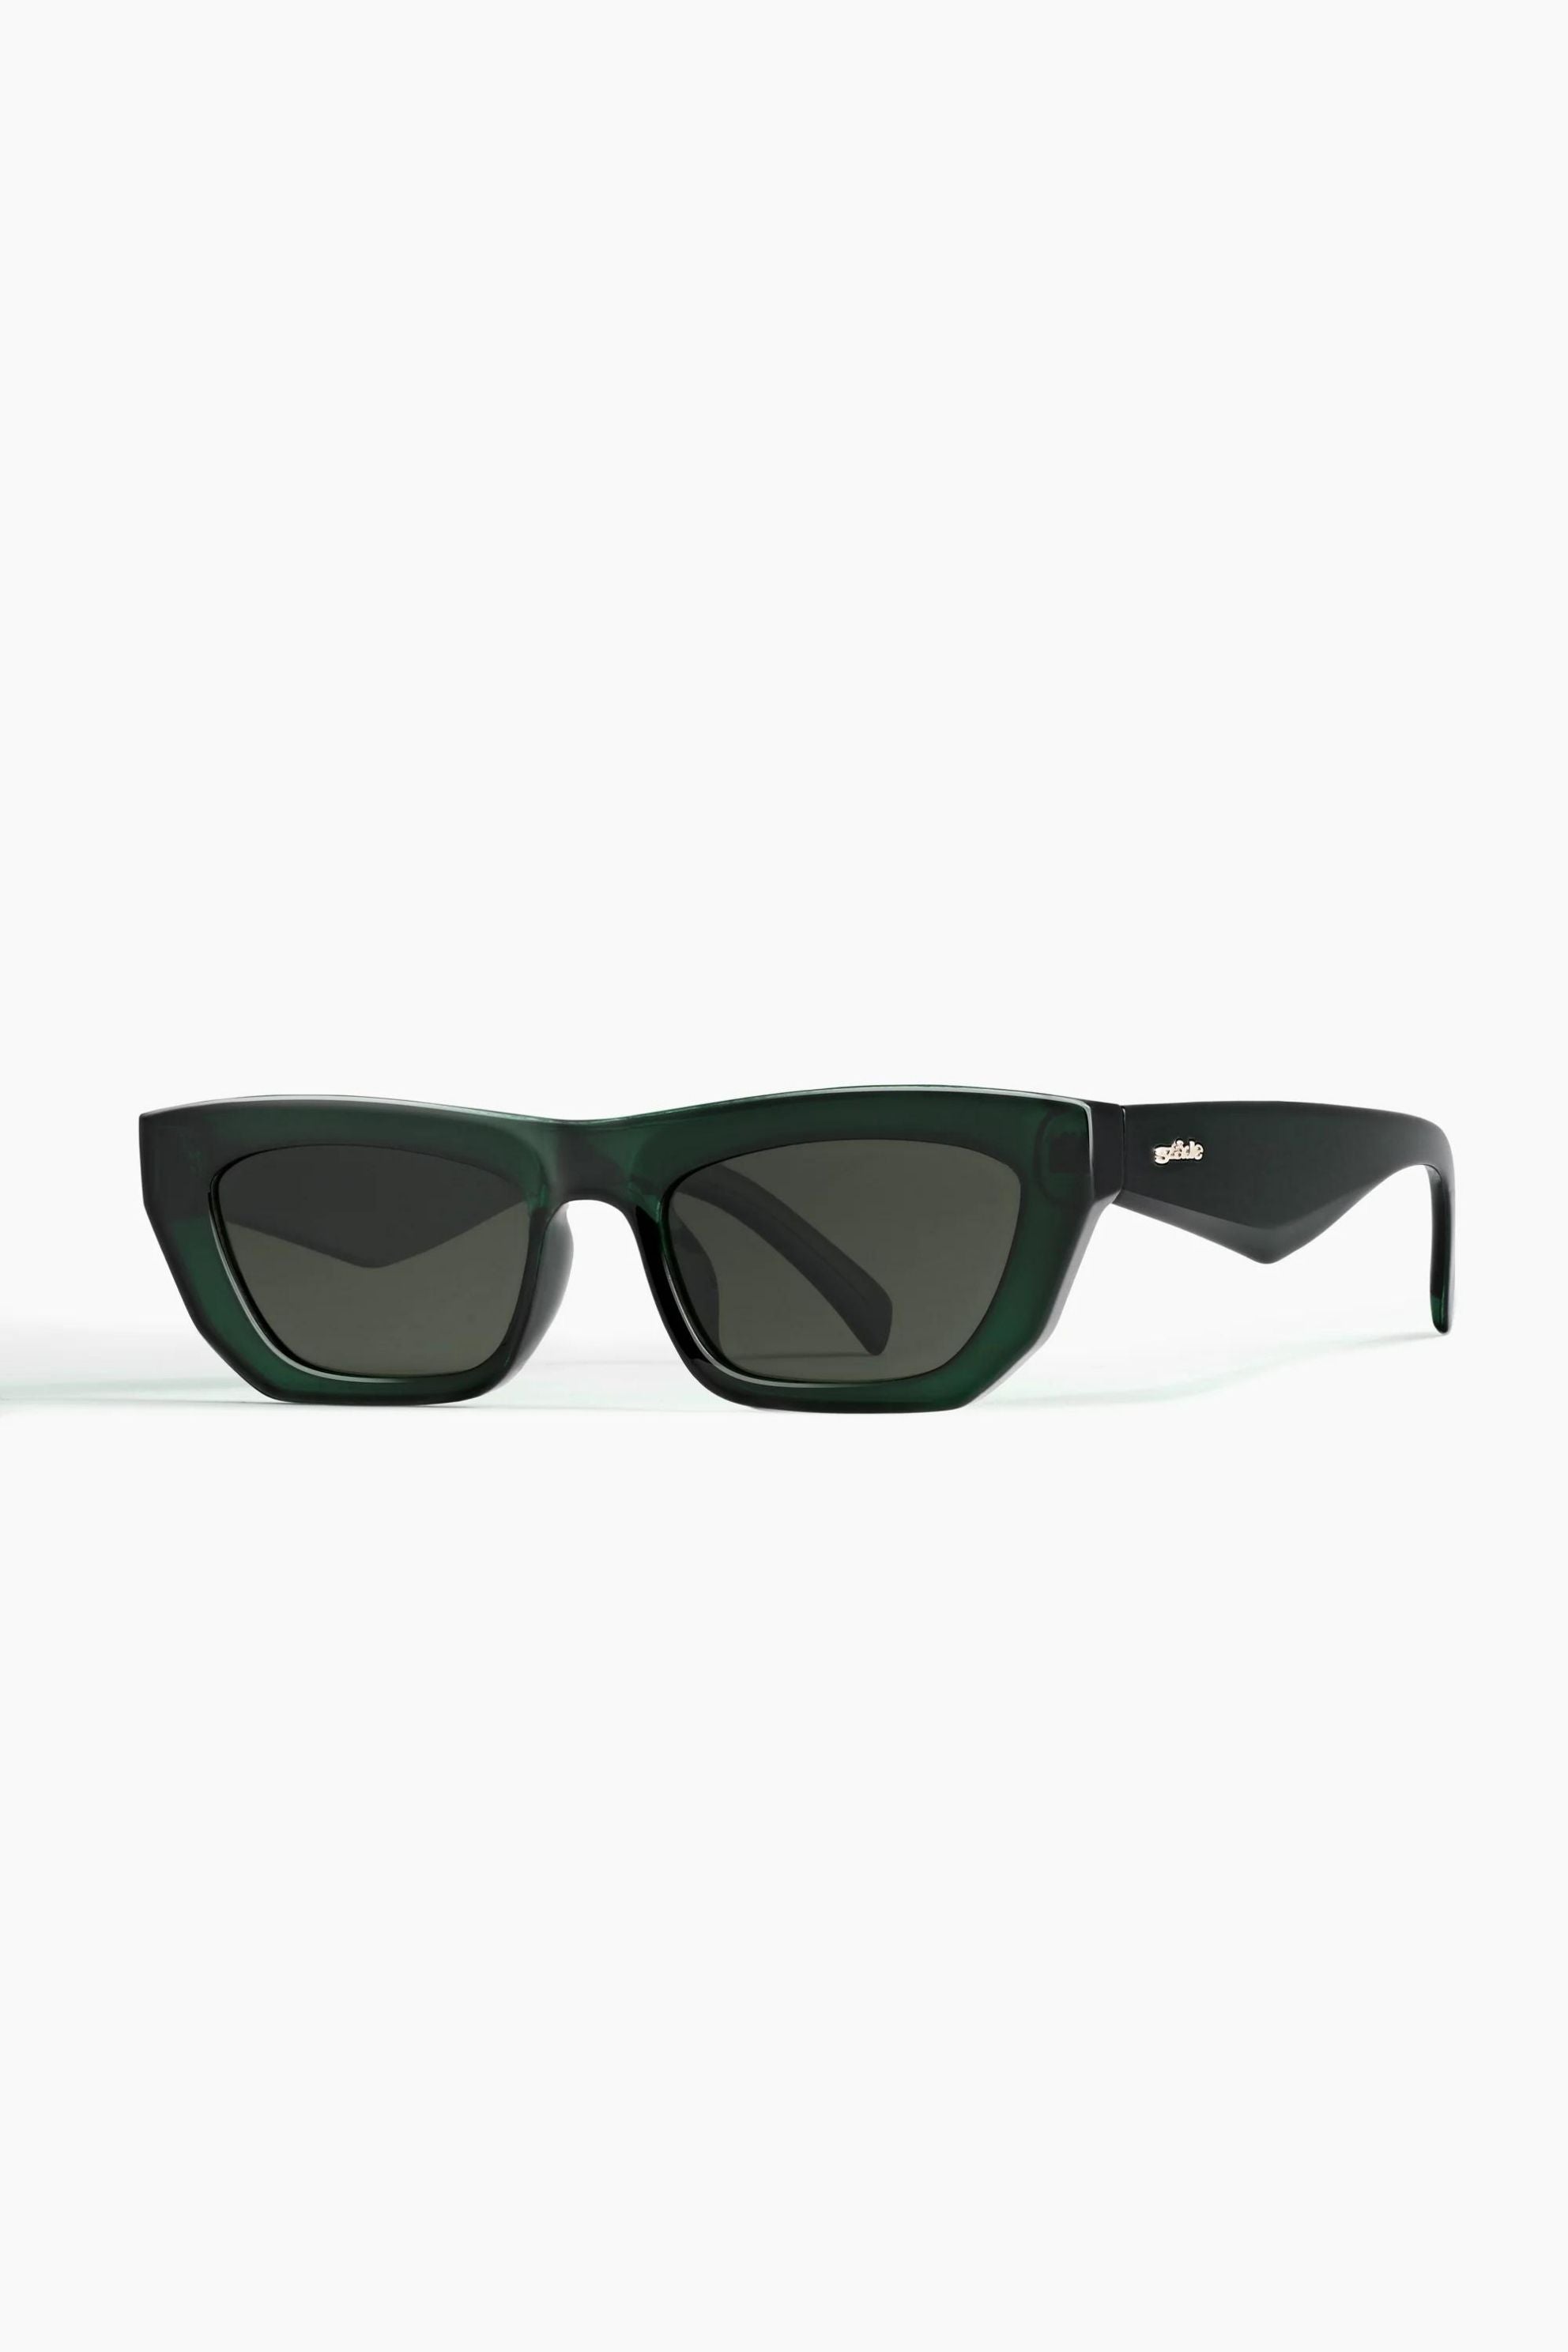 Cade Sunglasses Racing Green / Moss